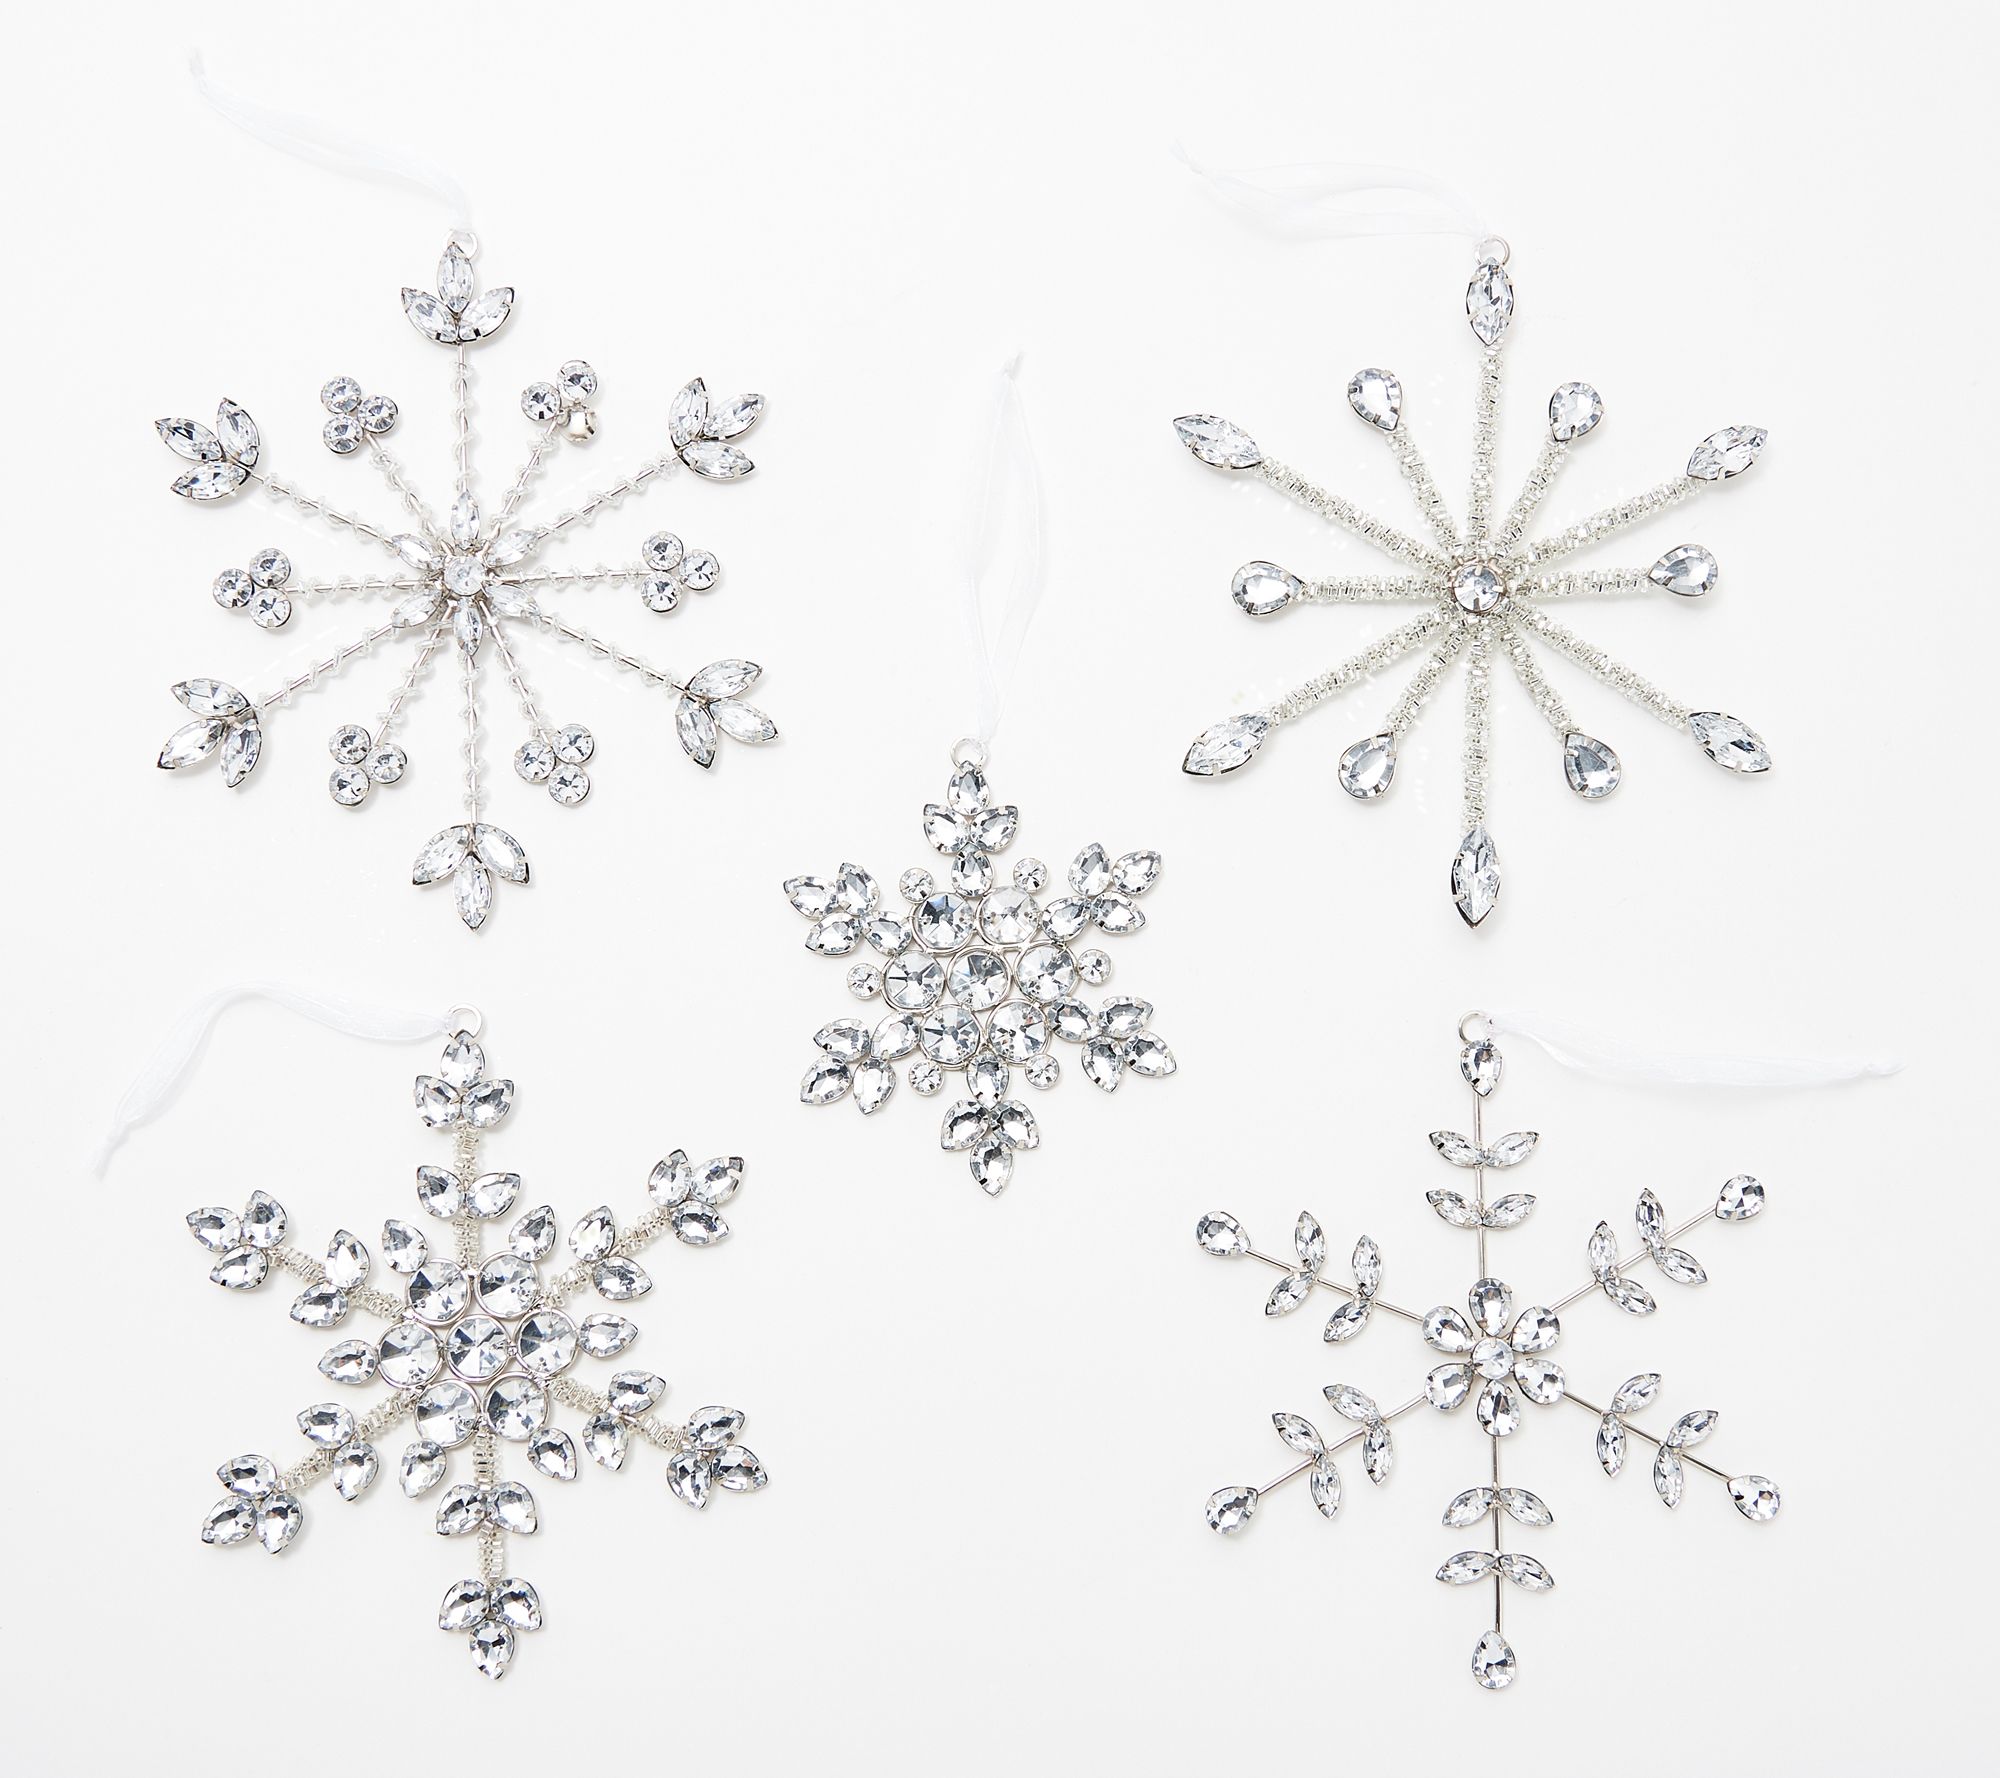 Martha Stewart Collection Snowflake Baking Pan Grey - 10.25 x